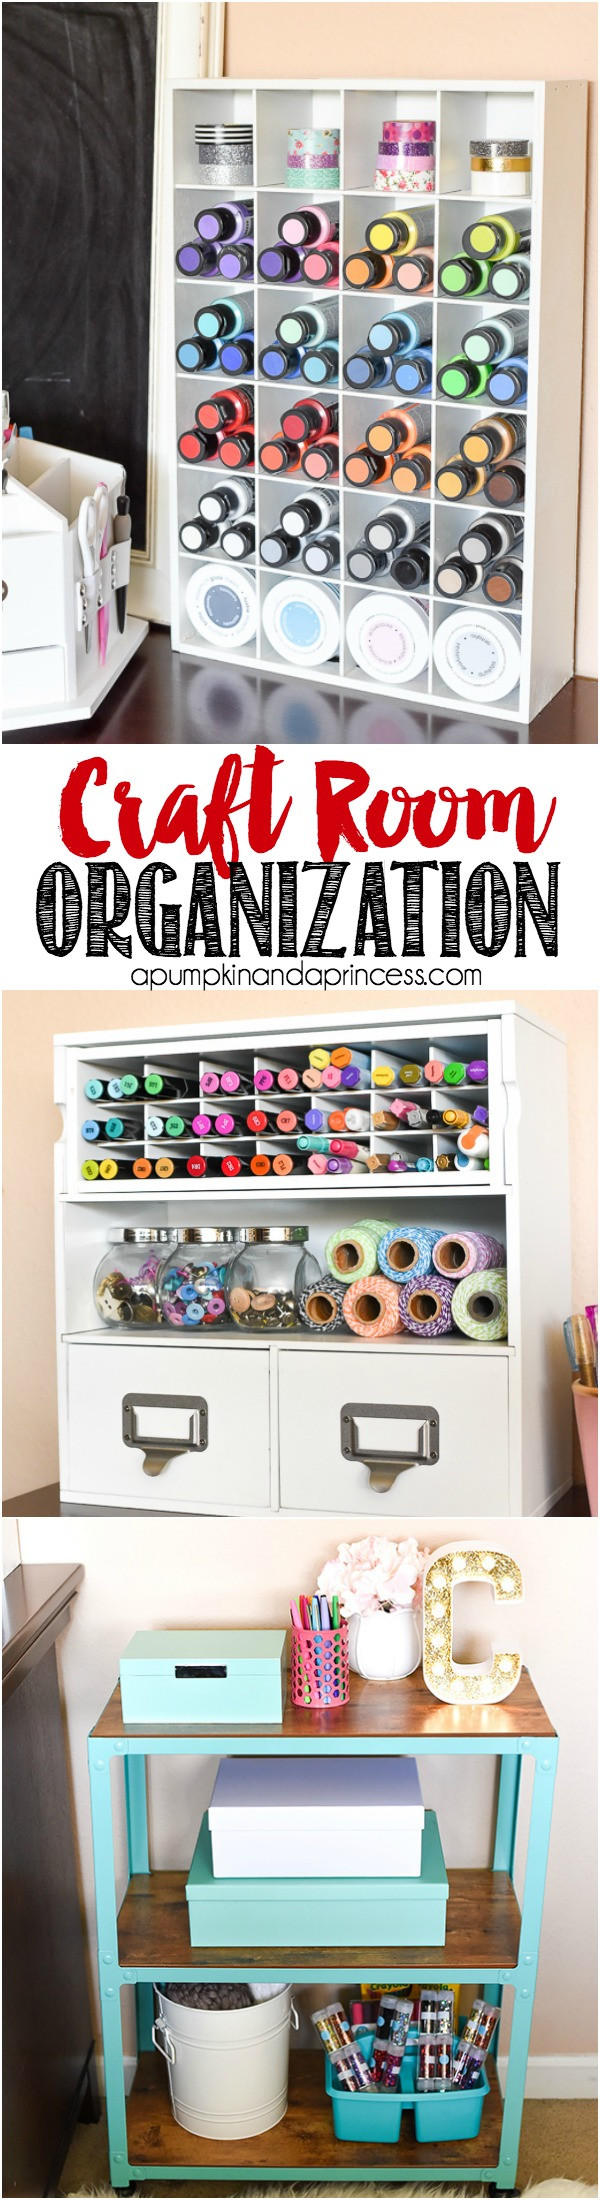 Organization Ideas For Craft Room
 Craft Room Organization A Pumpkin And A Princess